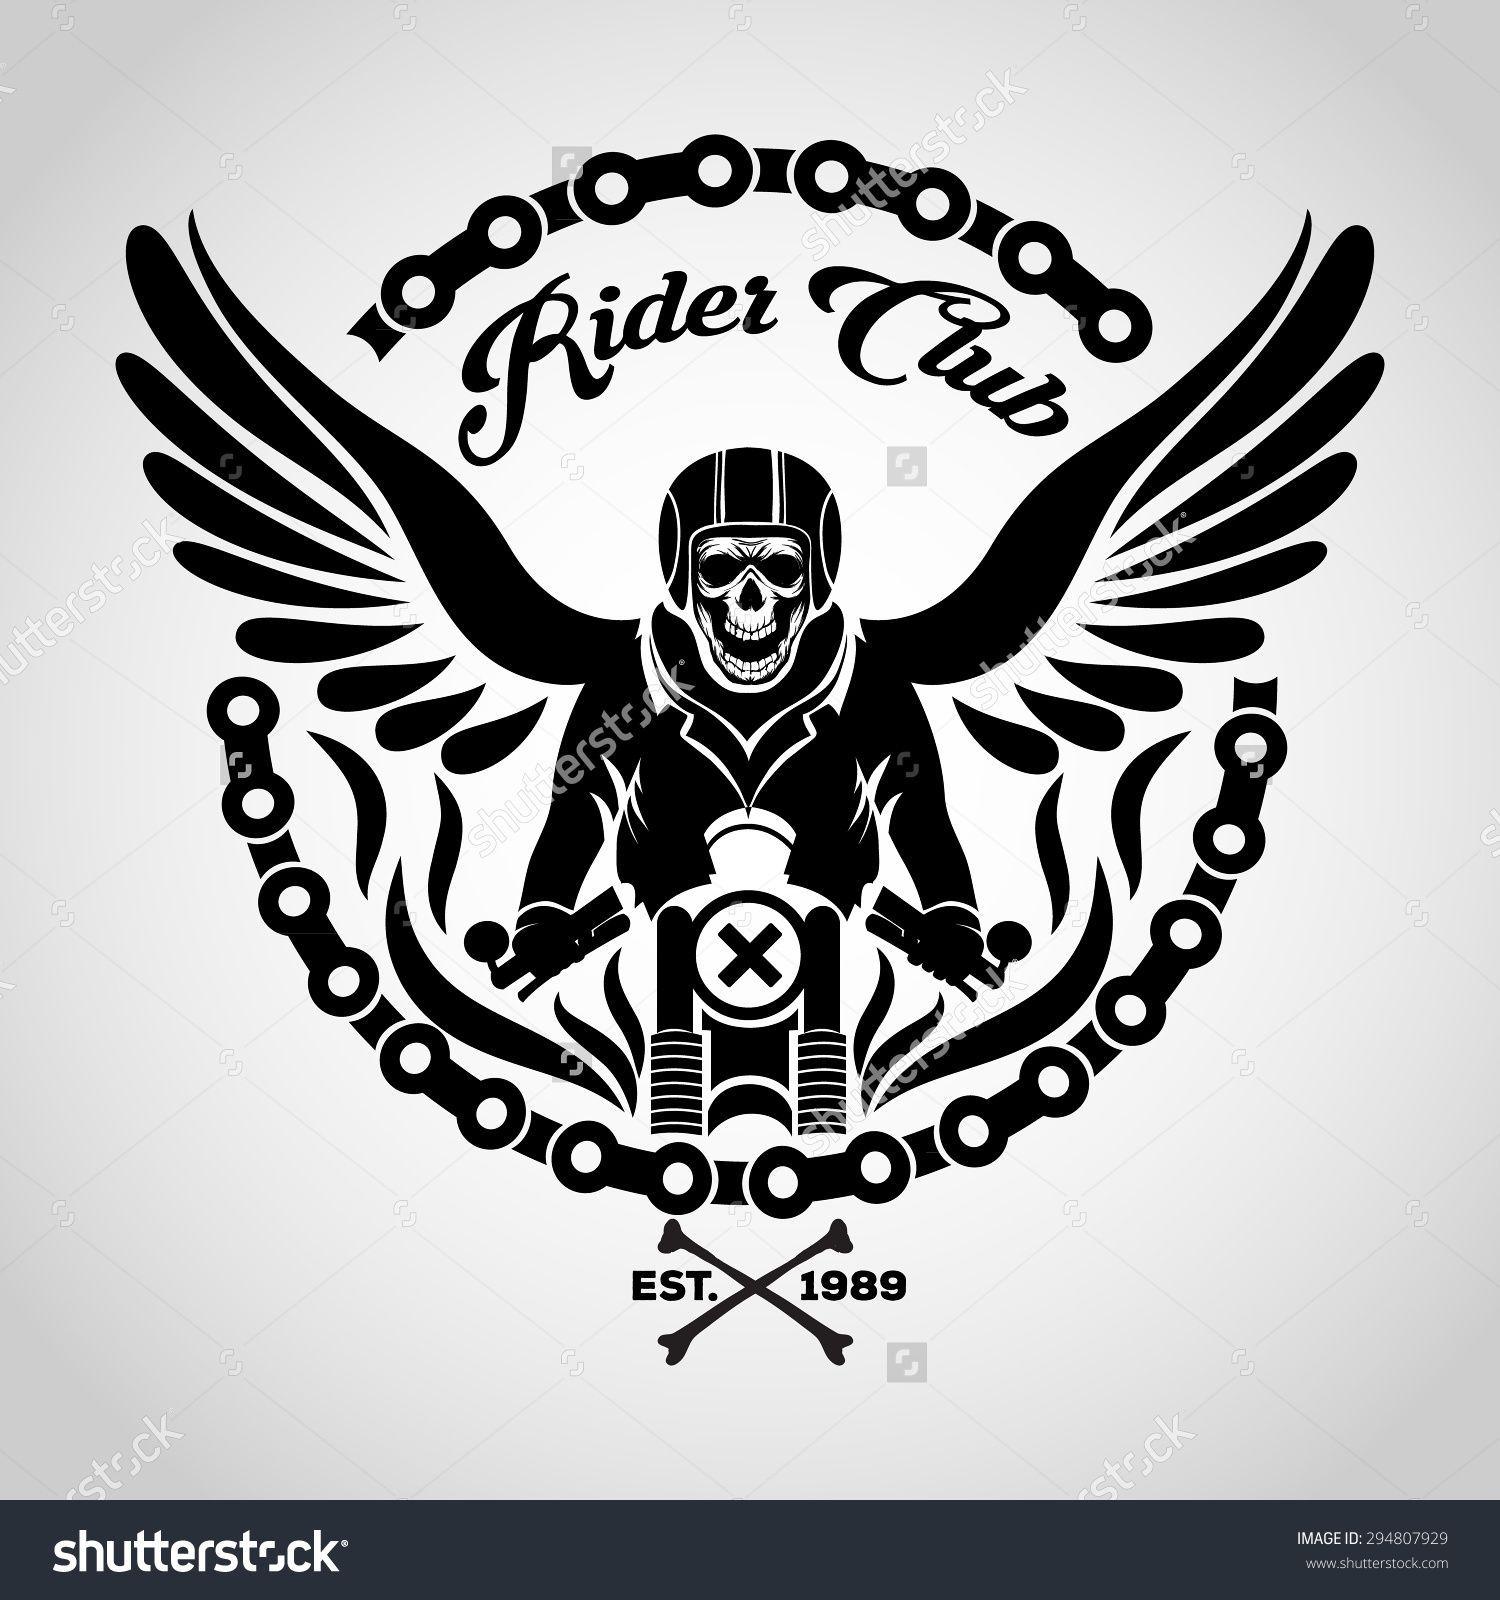 Motorcycle Skull Logo - Image result for motorcycle skull logo. CITRA. Logos, Skull logo